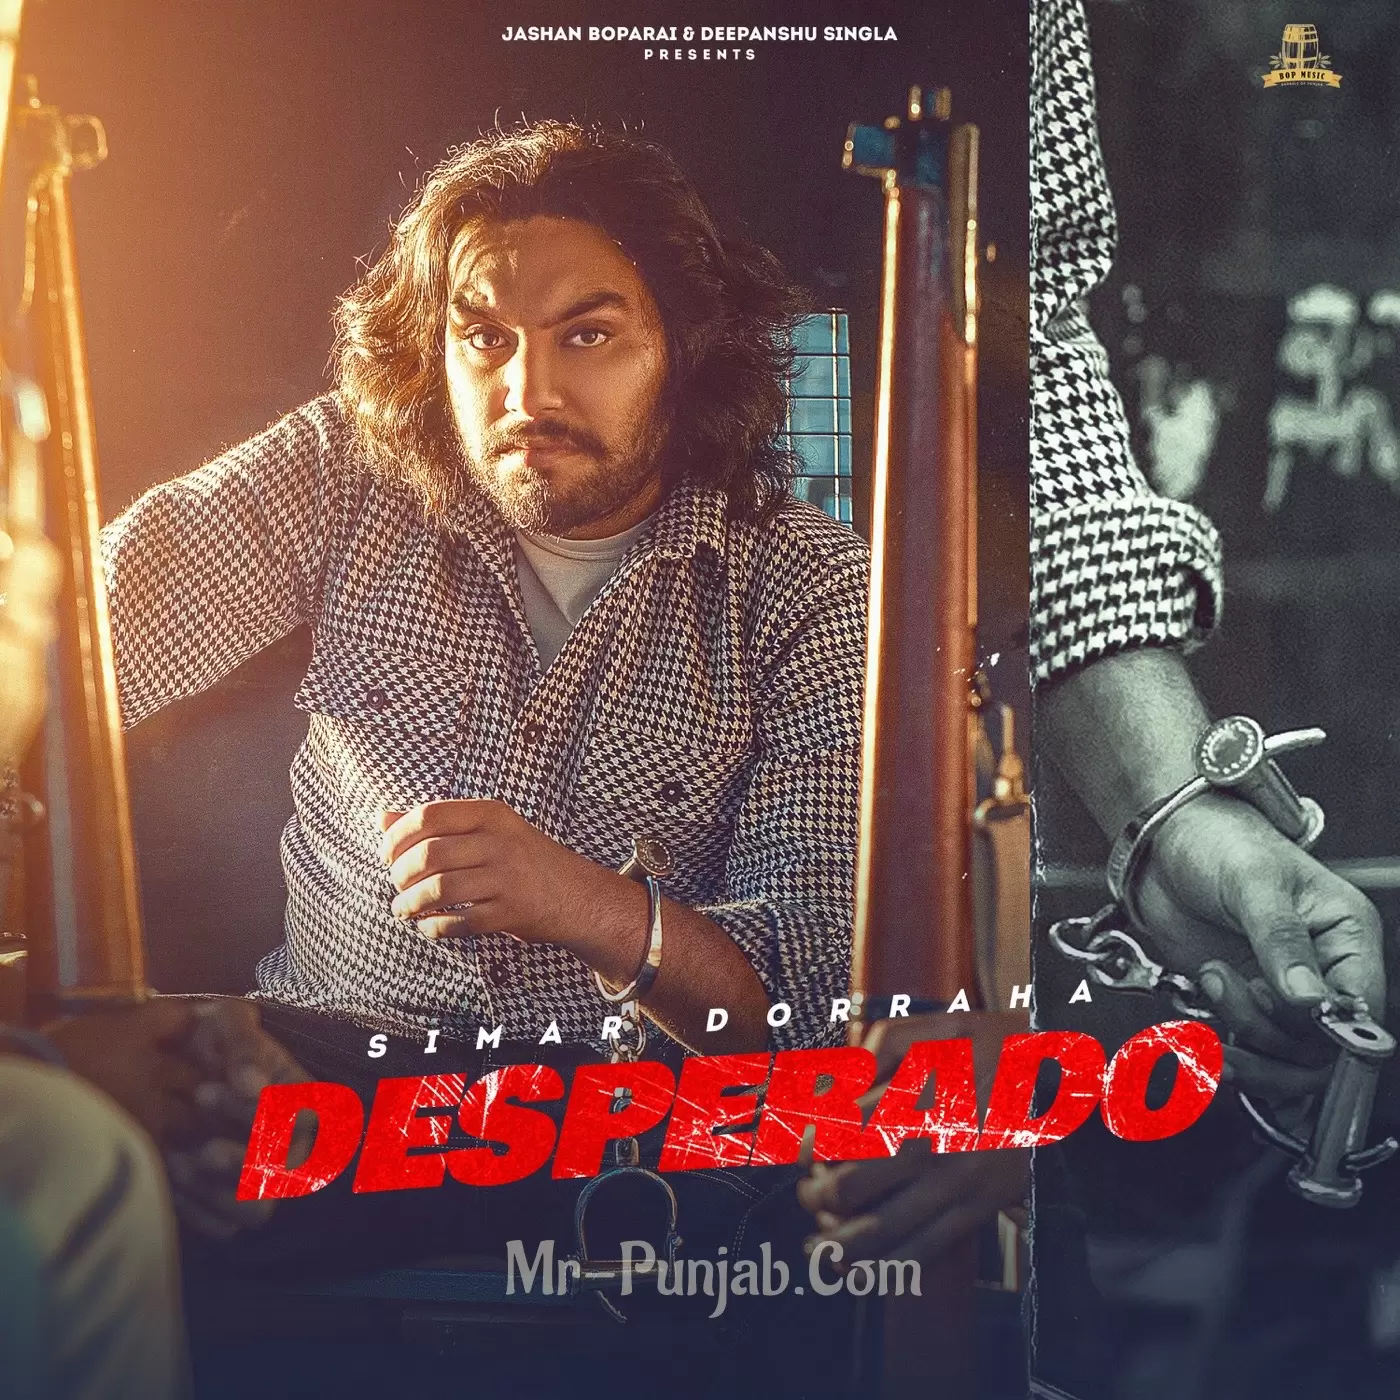 Desperado Simar Dorraha Mp3 Download Song - Mr-Punjab